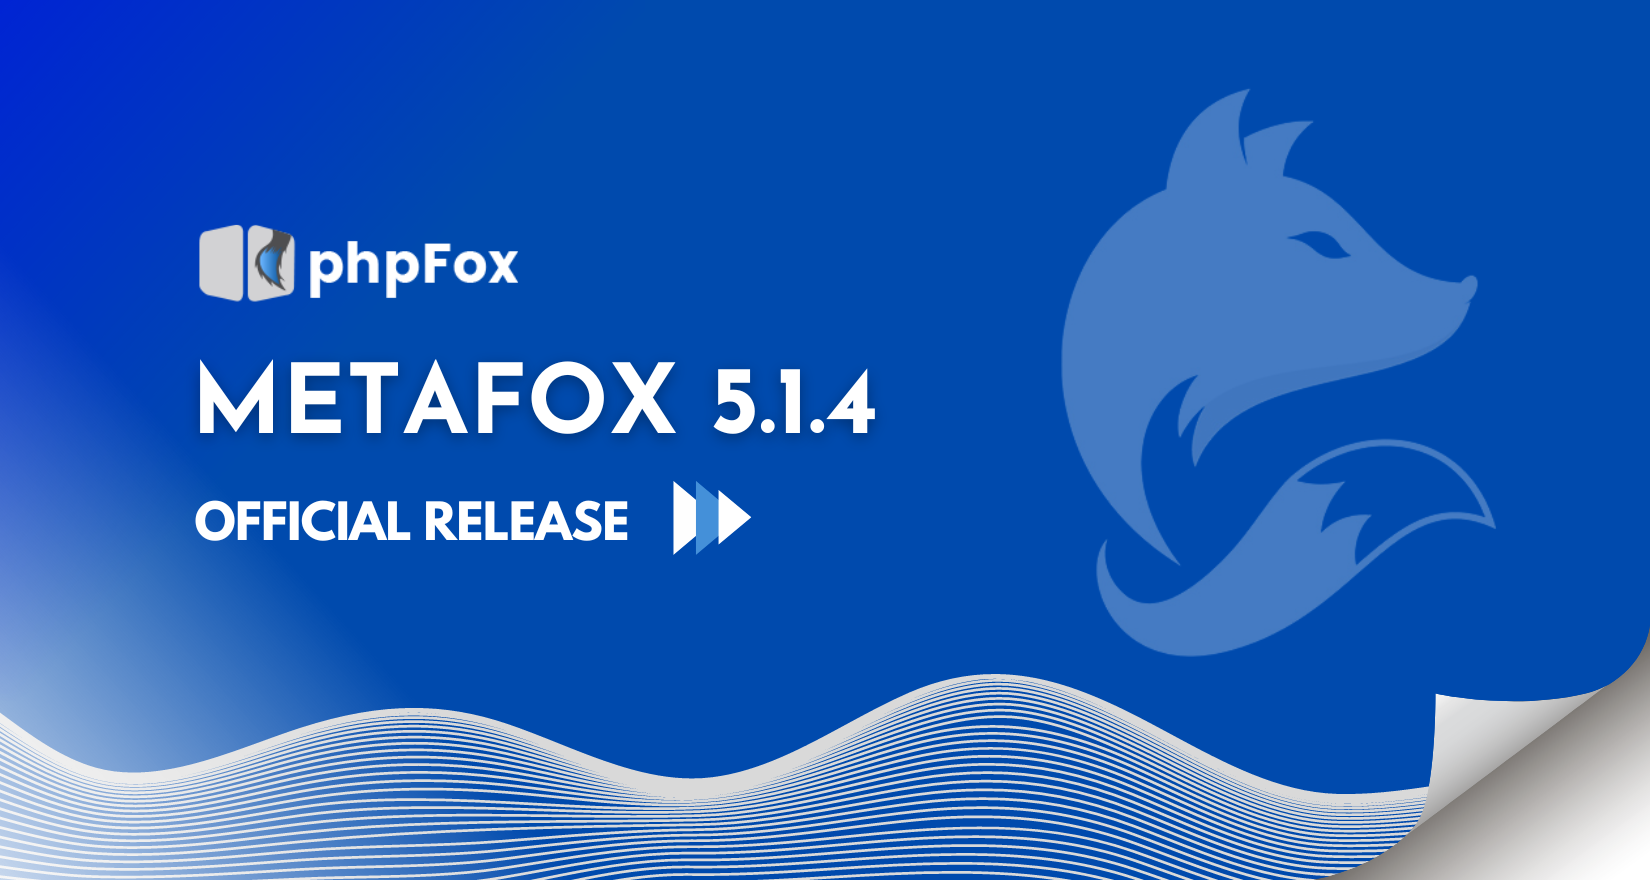 MetaFox 5.1.4 Official Release